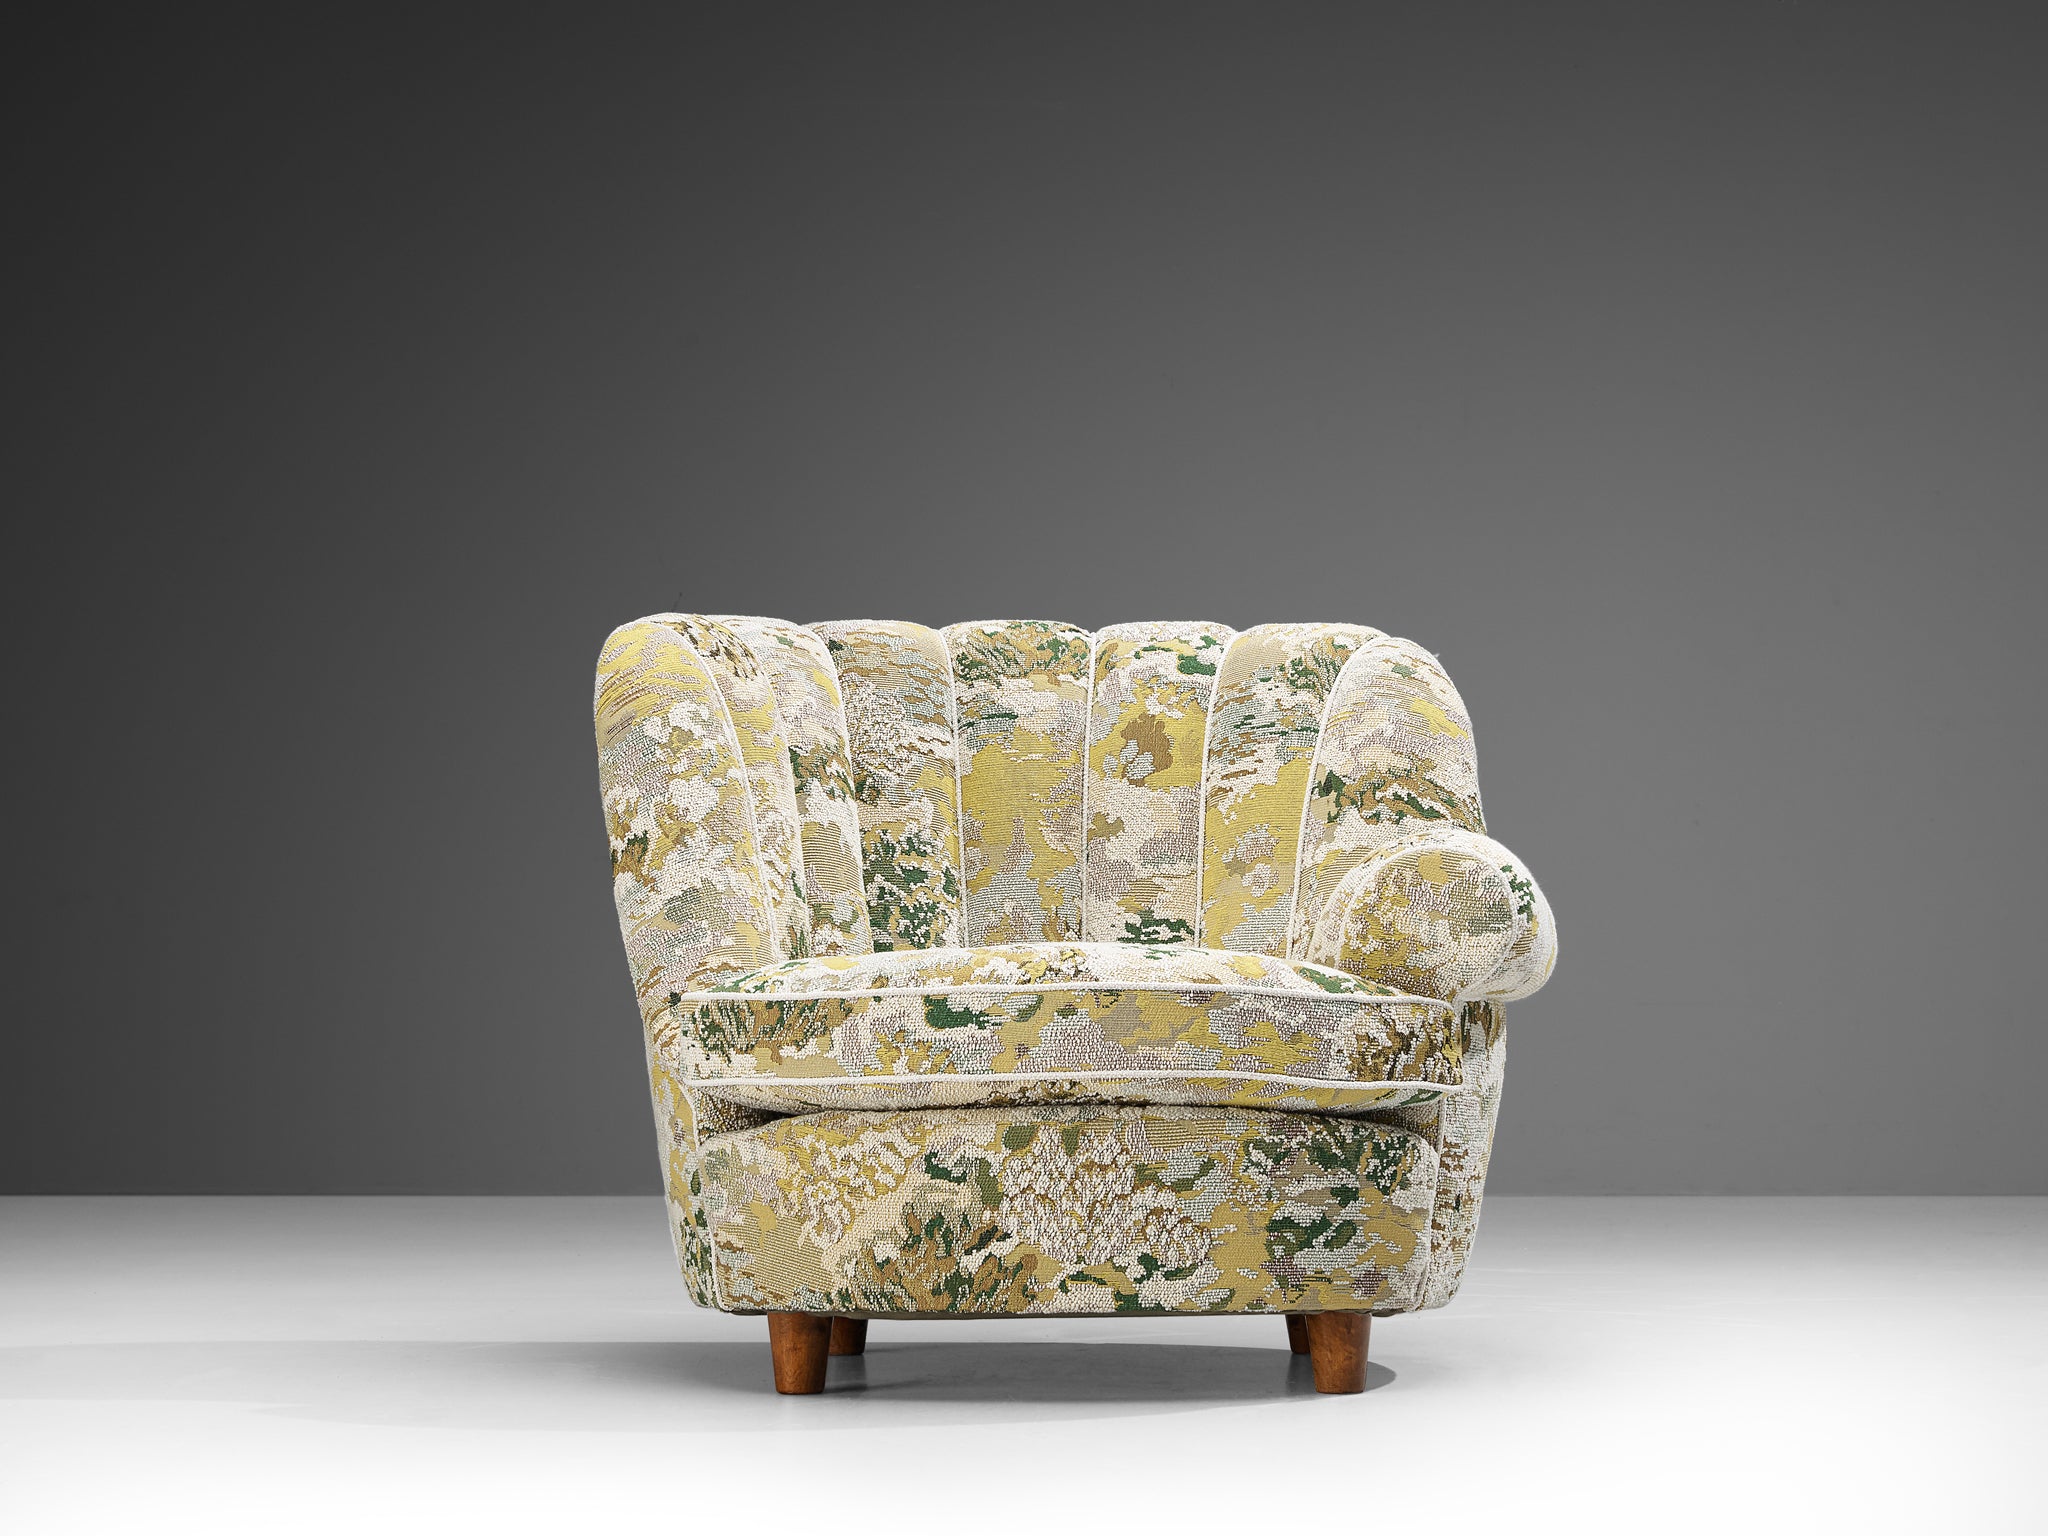 Carl Malmsten 'Redet' Lounge Chair